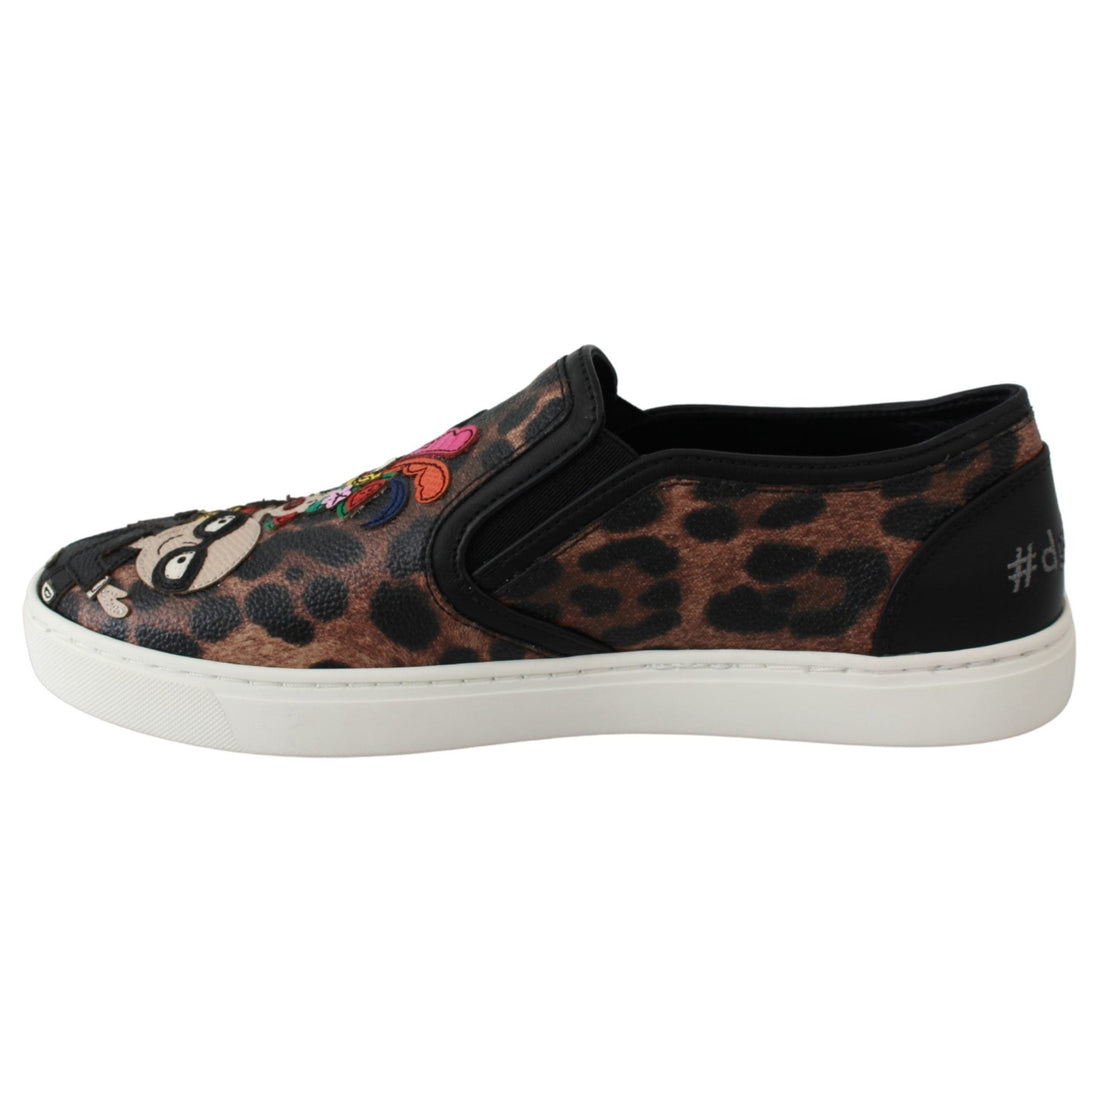 Dolce & Gabbana Leather Leopard #dgfamily Loafers Shoes - Paris Deluxe